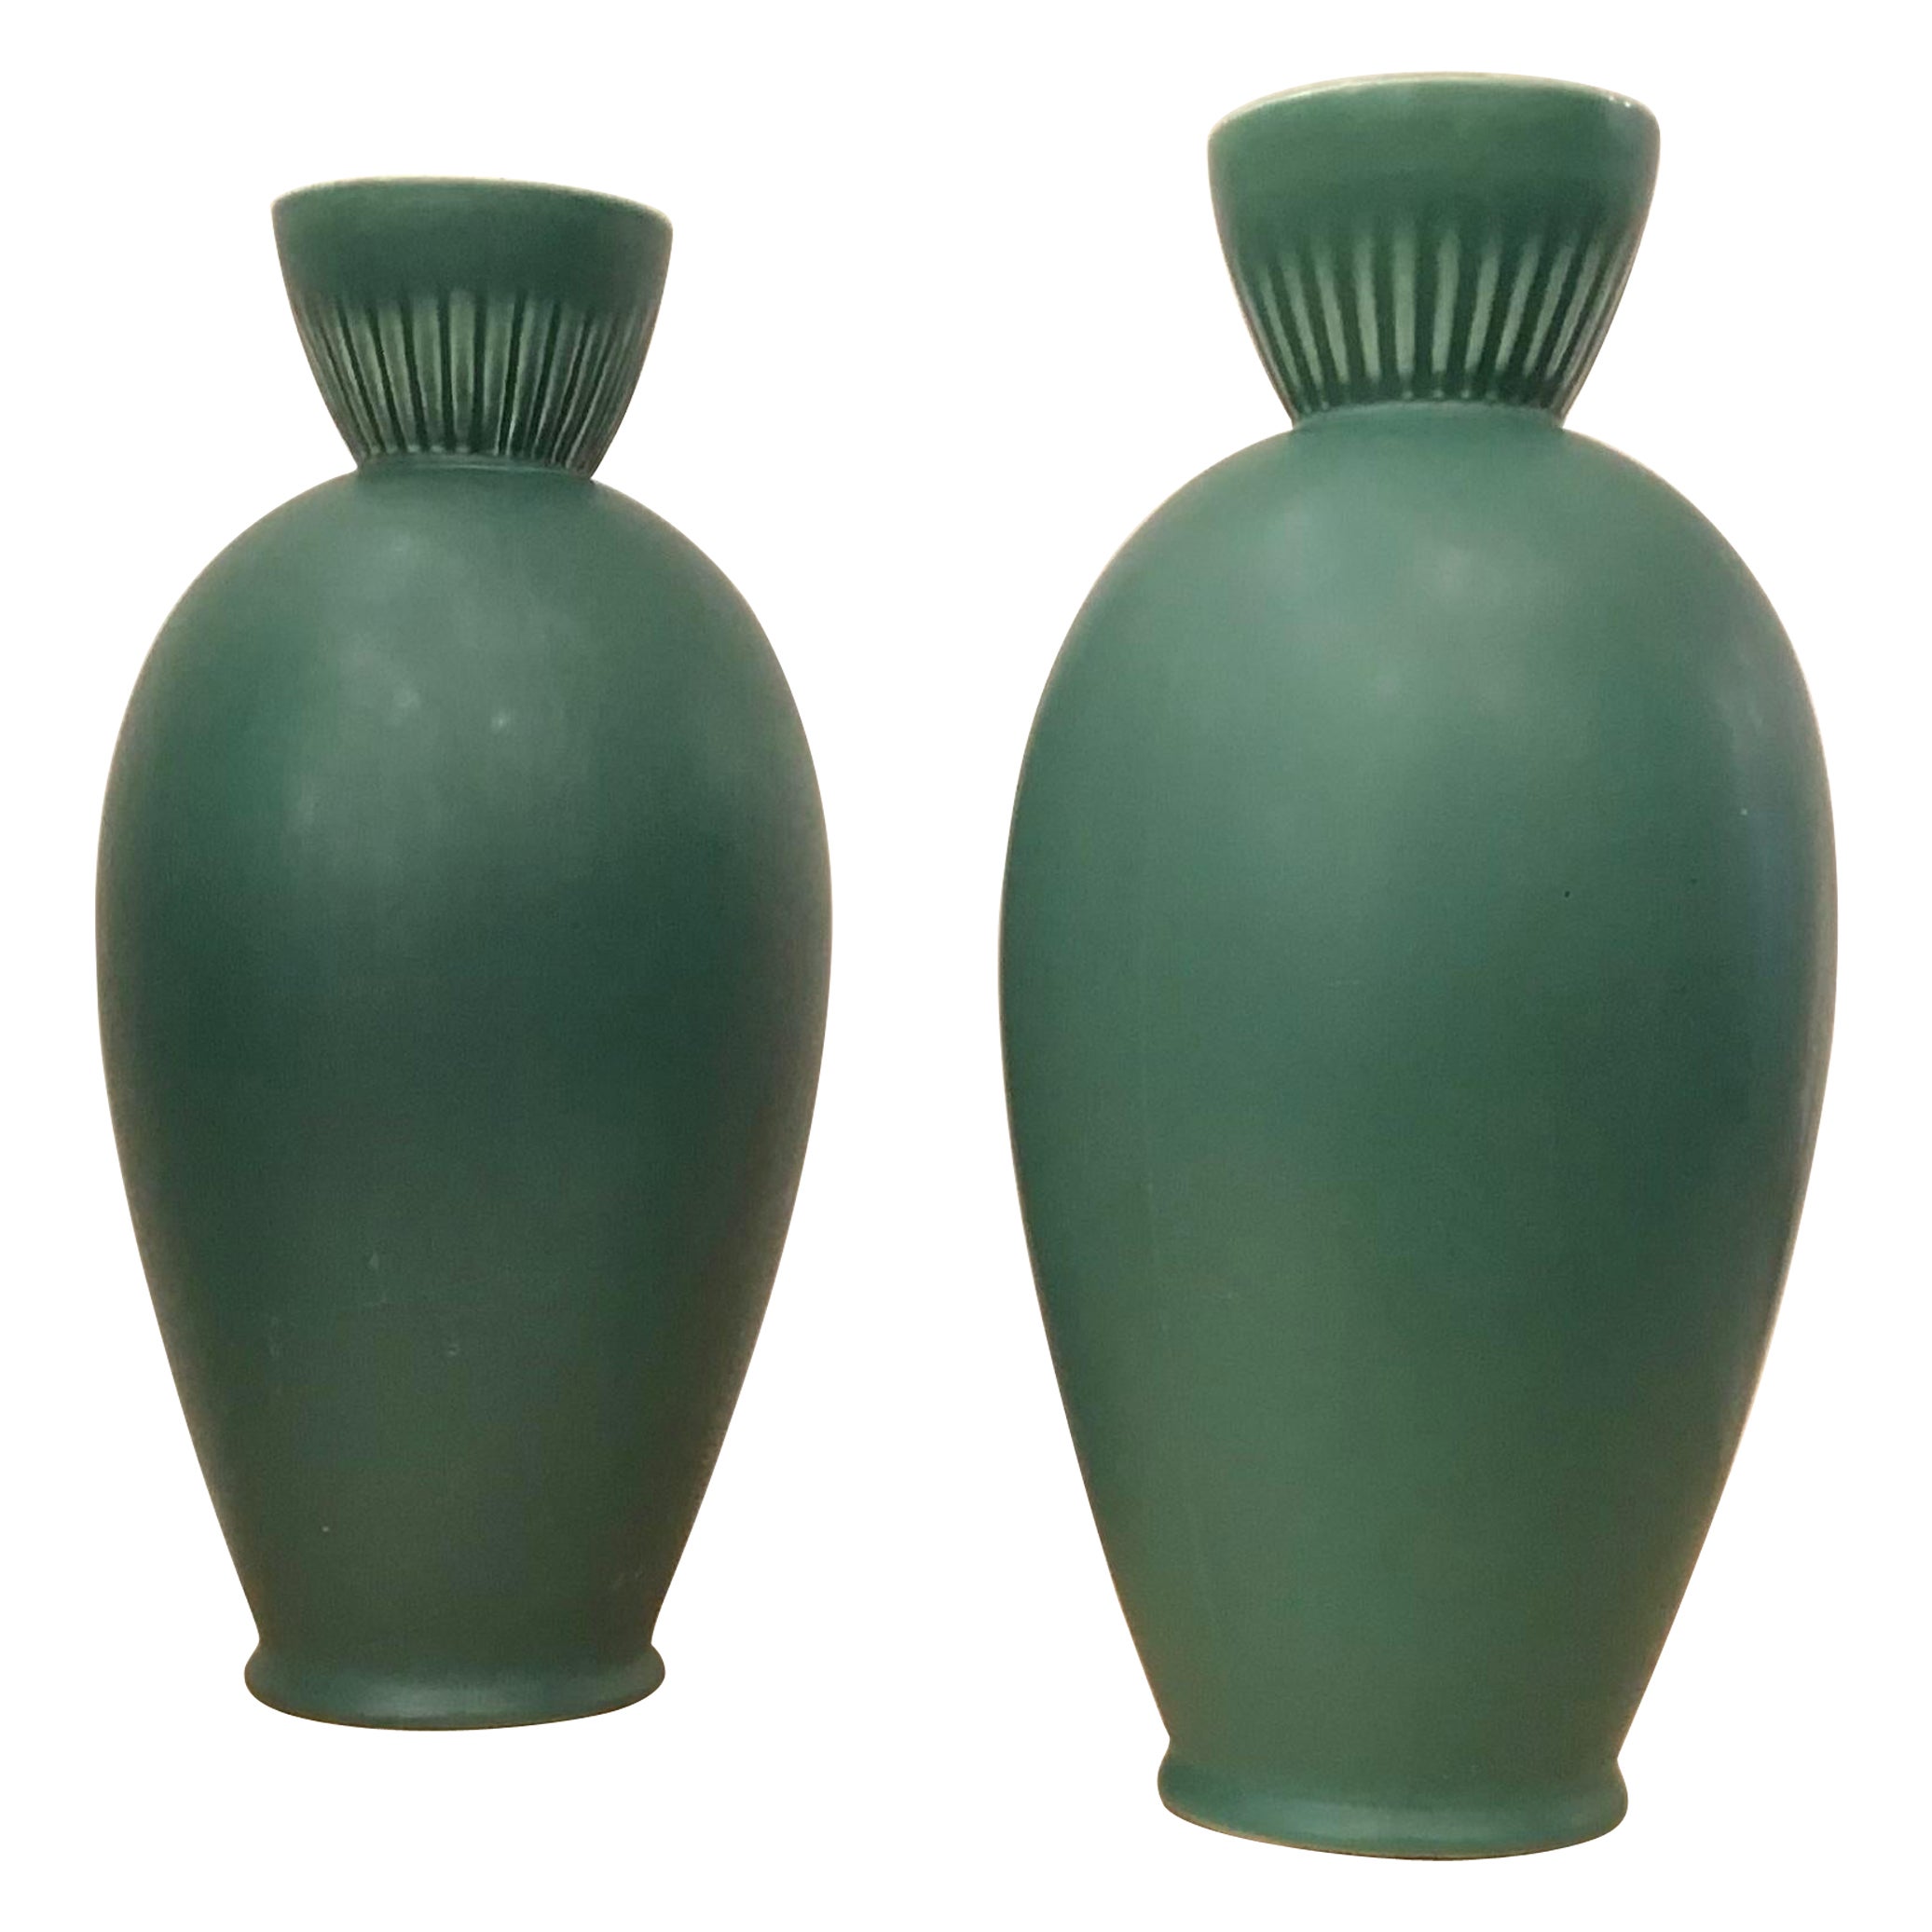 Vasen aus Keramik von Richard Ginori Giovanni Gariboldi, 1950, Italien